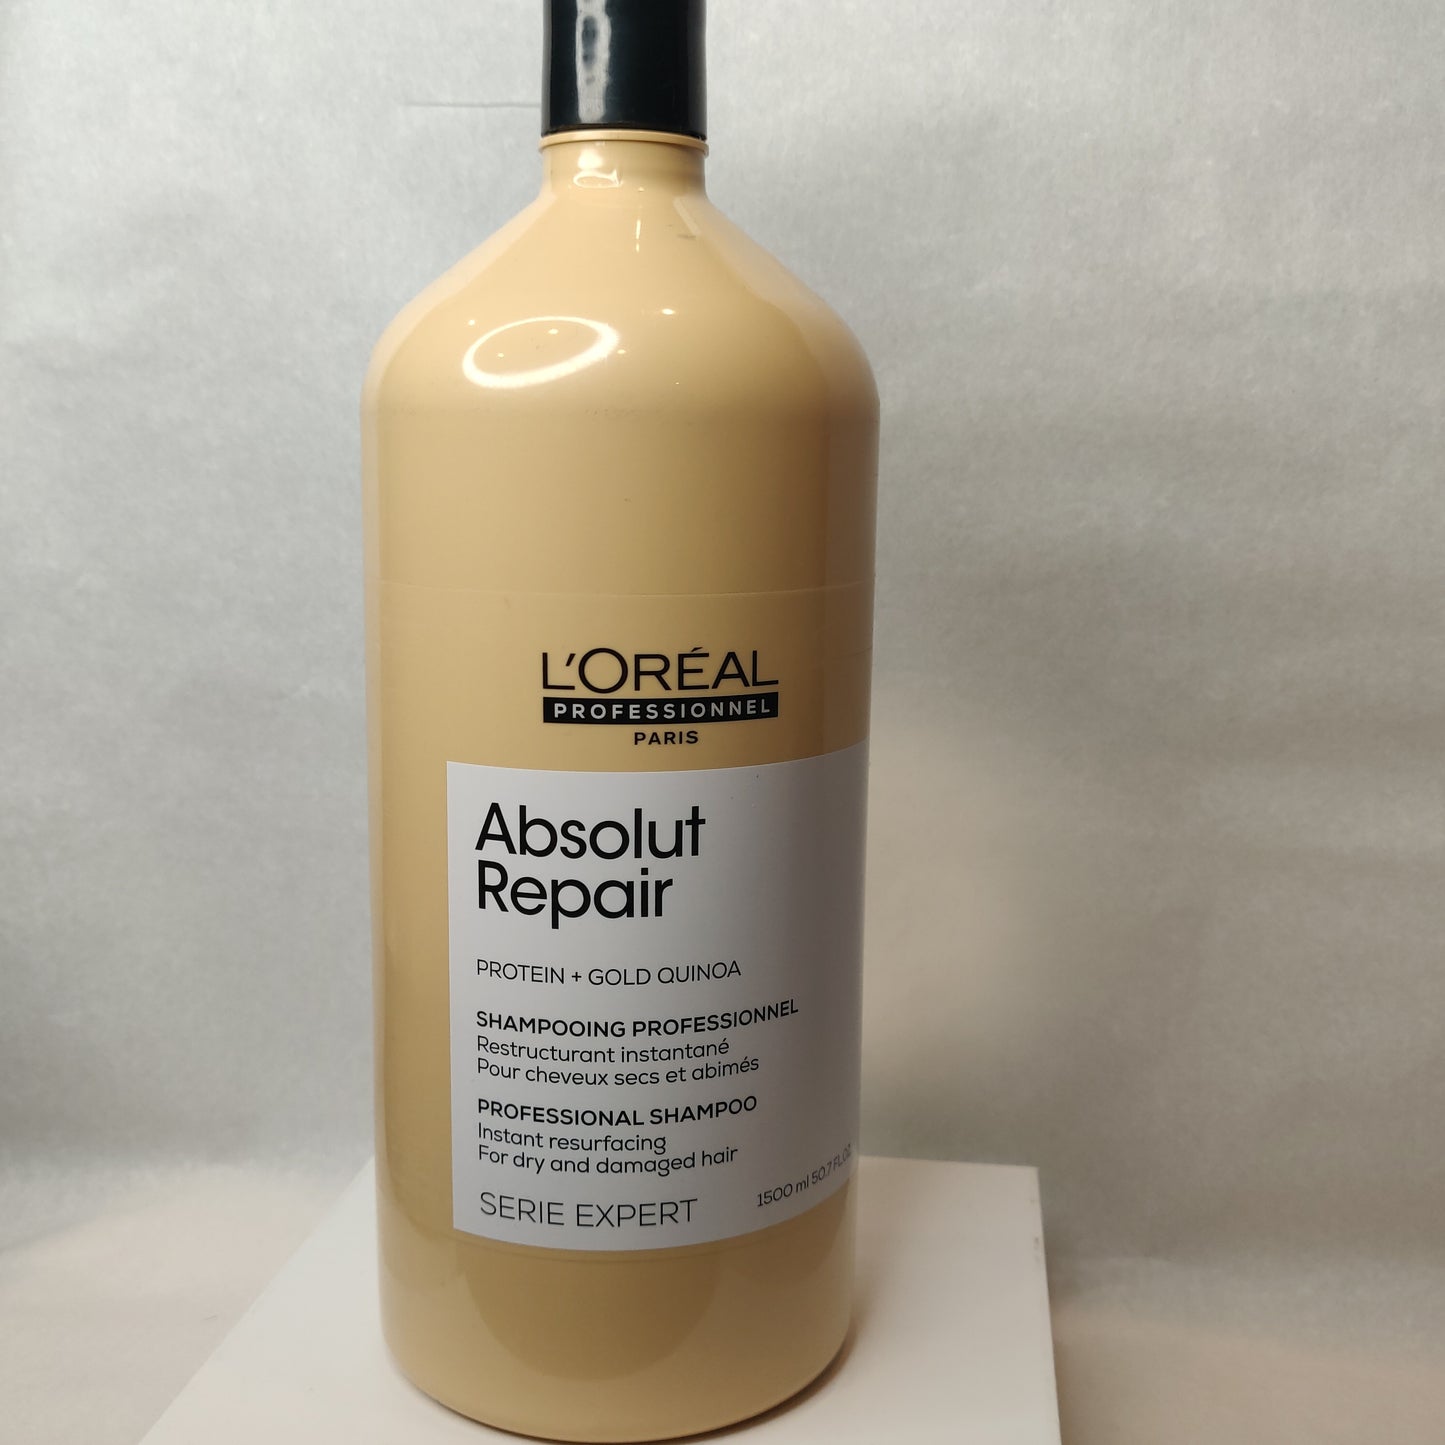 L'Oreal Absolut Repair Shampoo